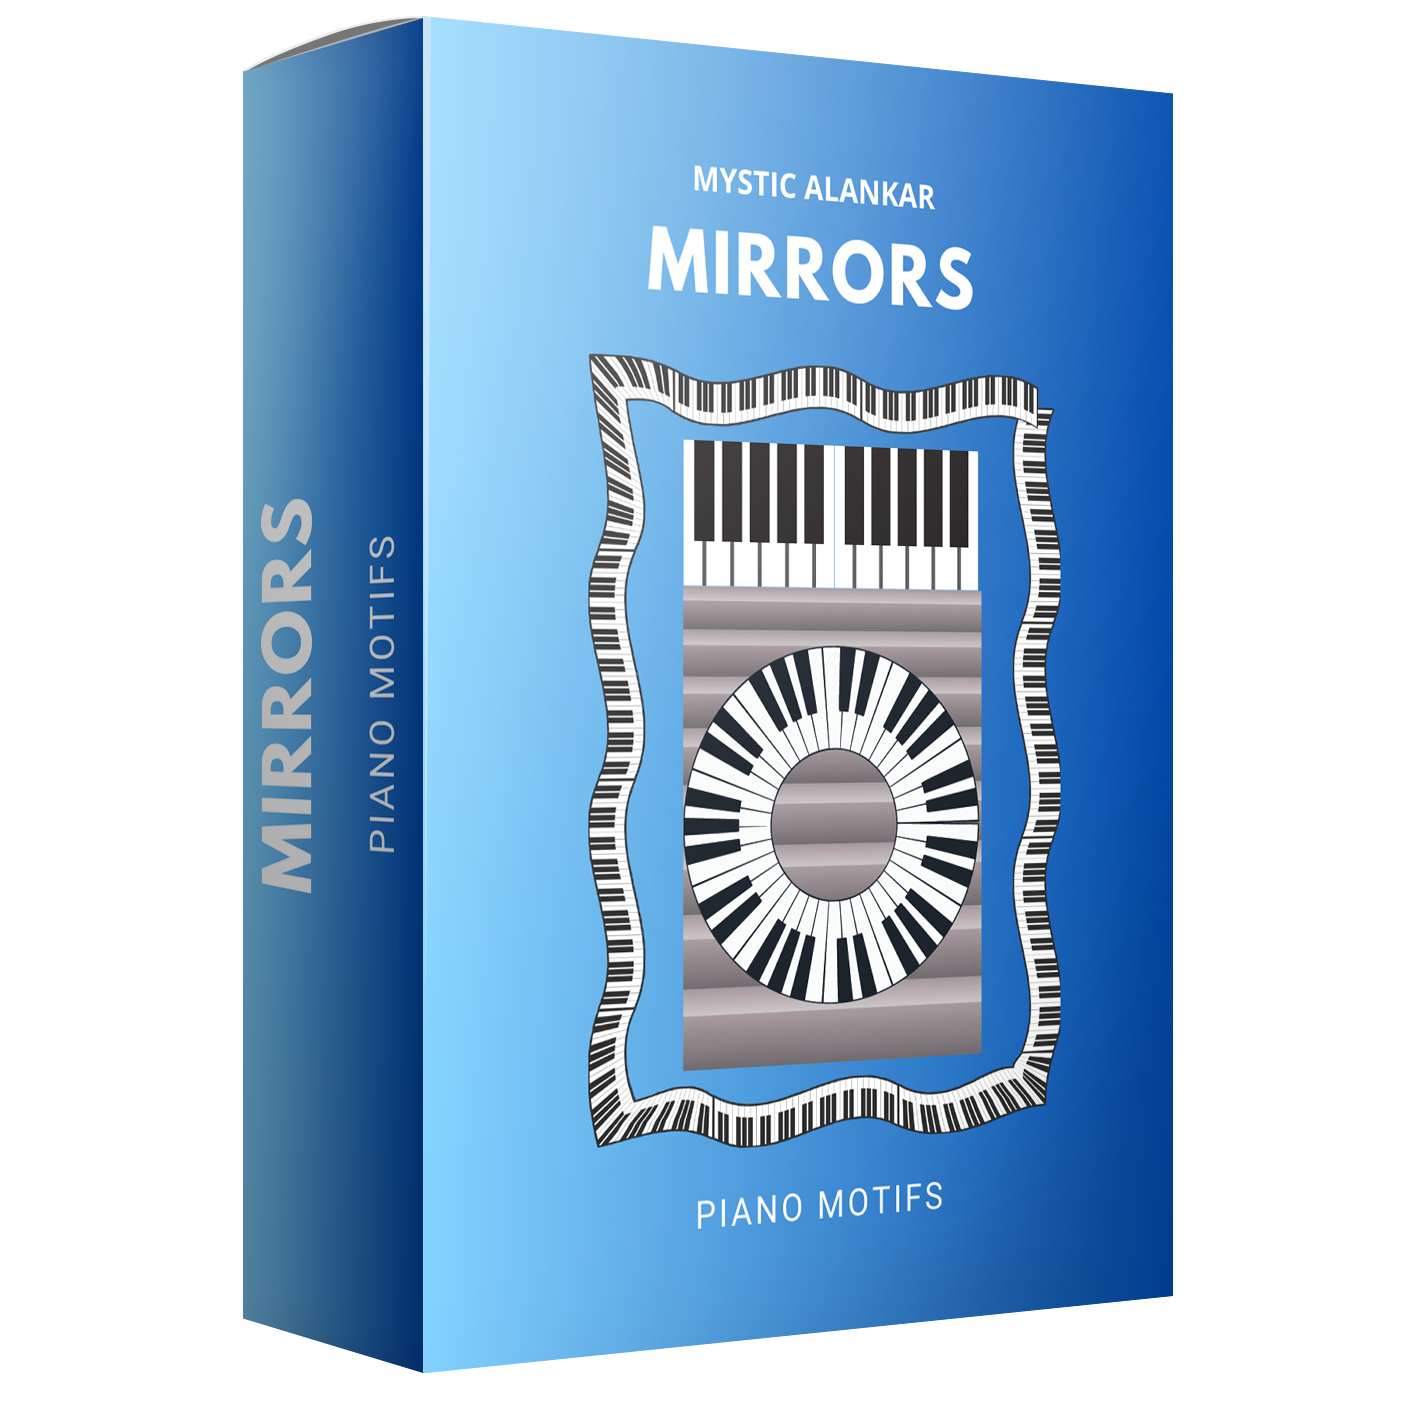 Mirrors - Piano Motifs